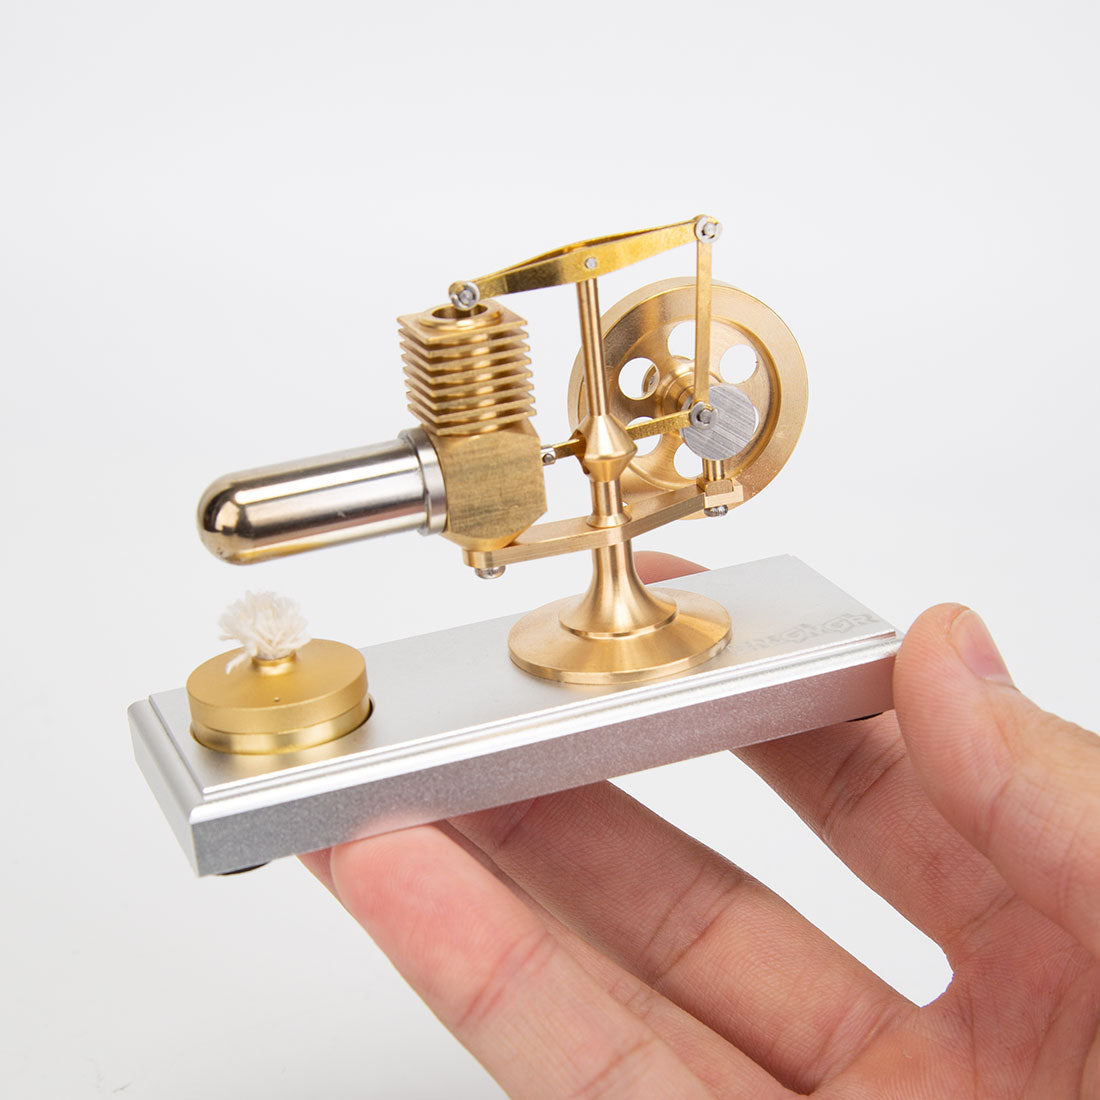 Building the World's Smallest Stirling Engine Model Kits That Runs J02 - stirlingkit